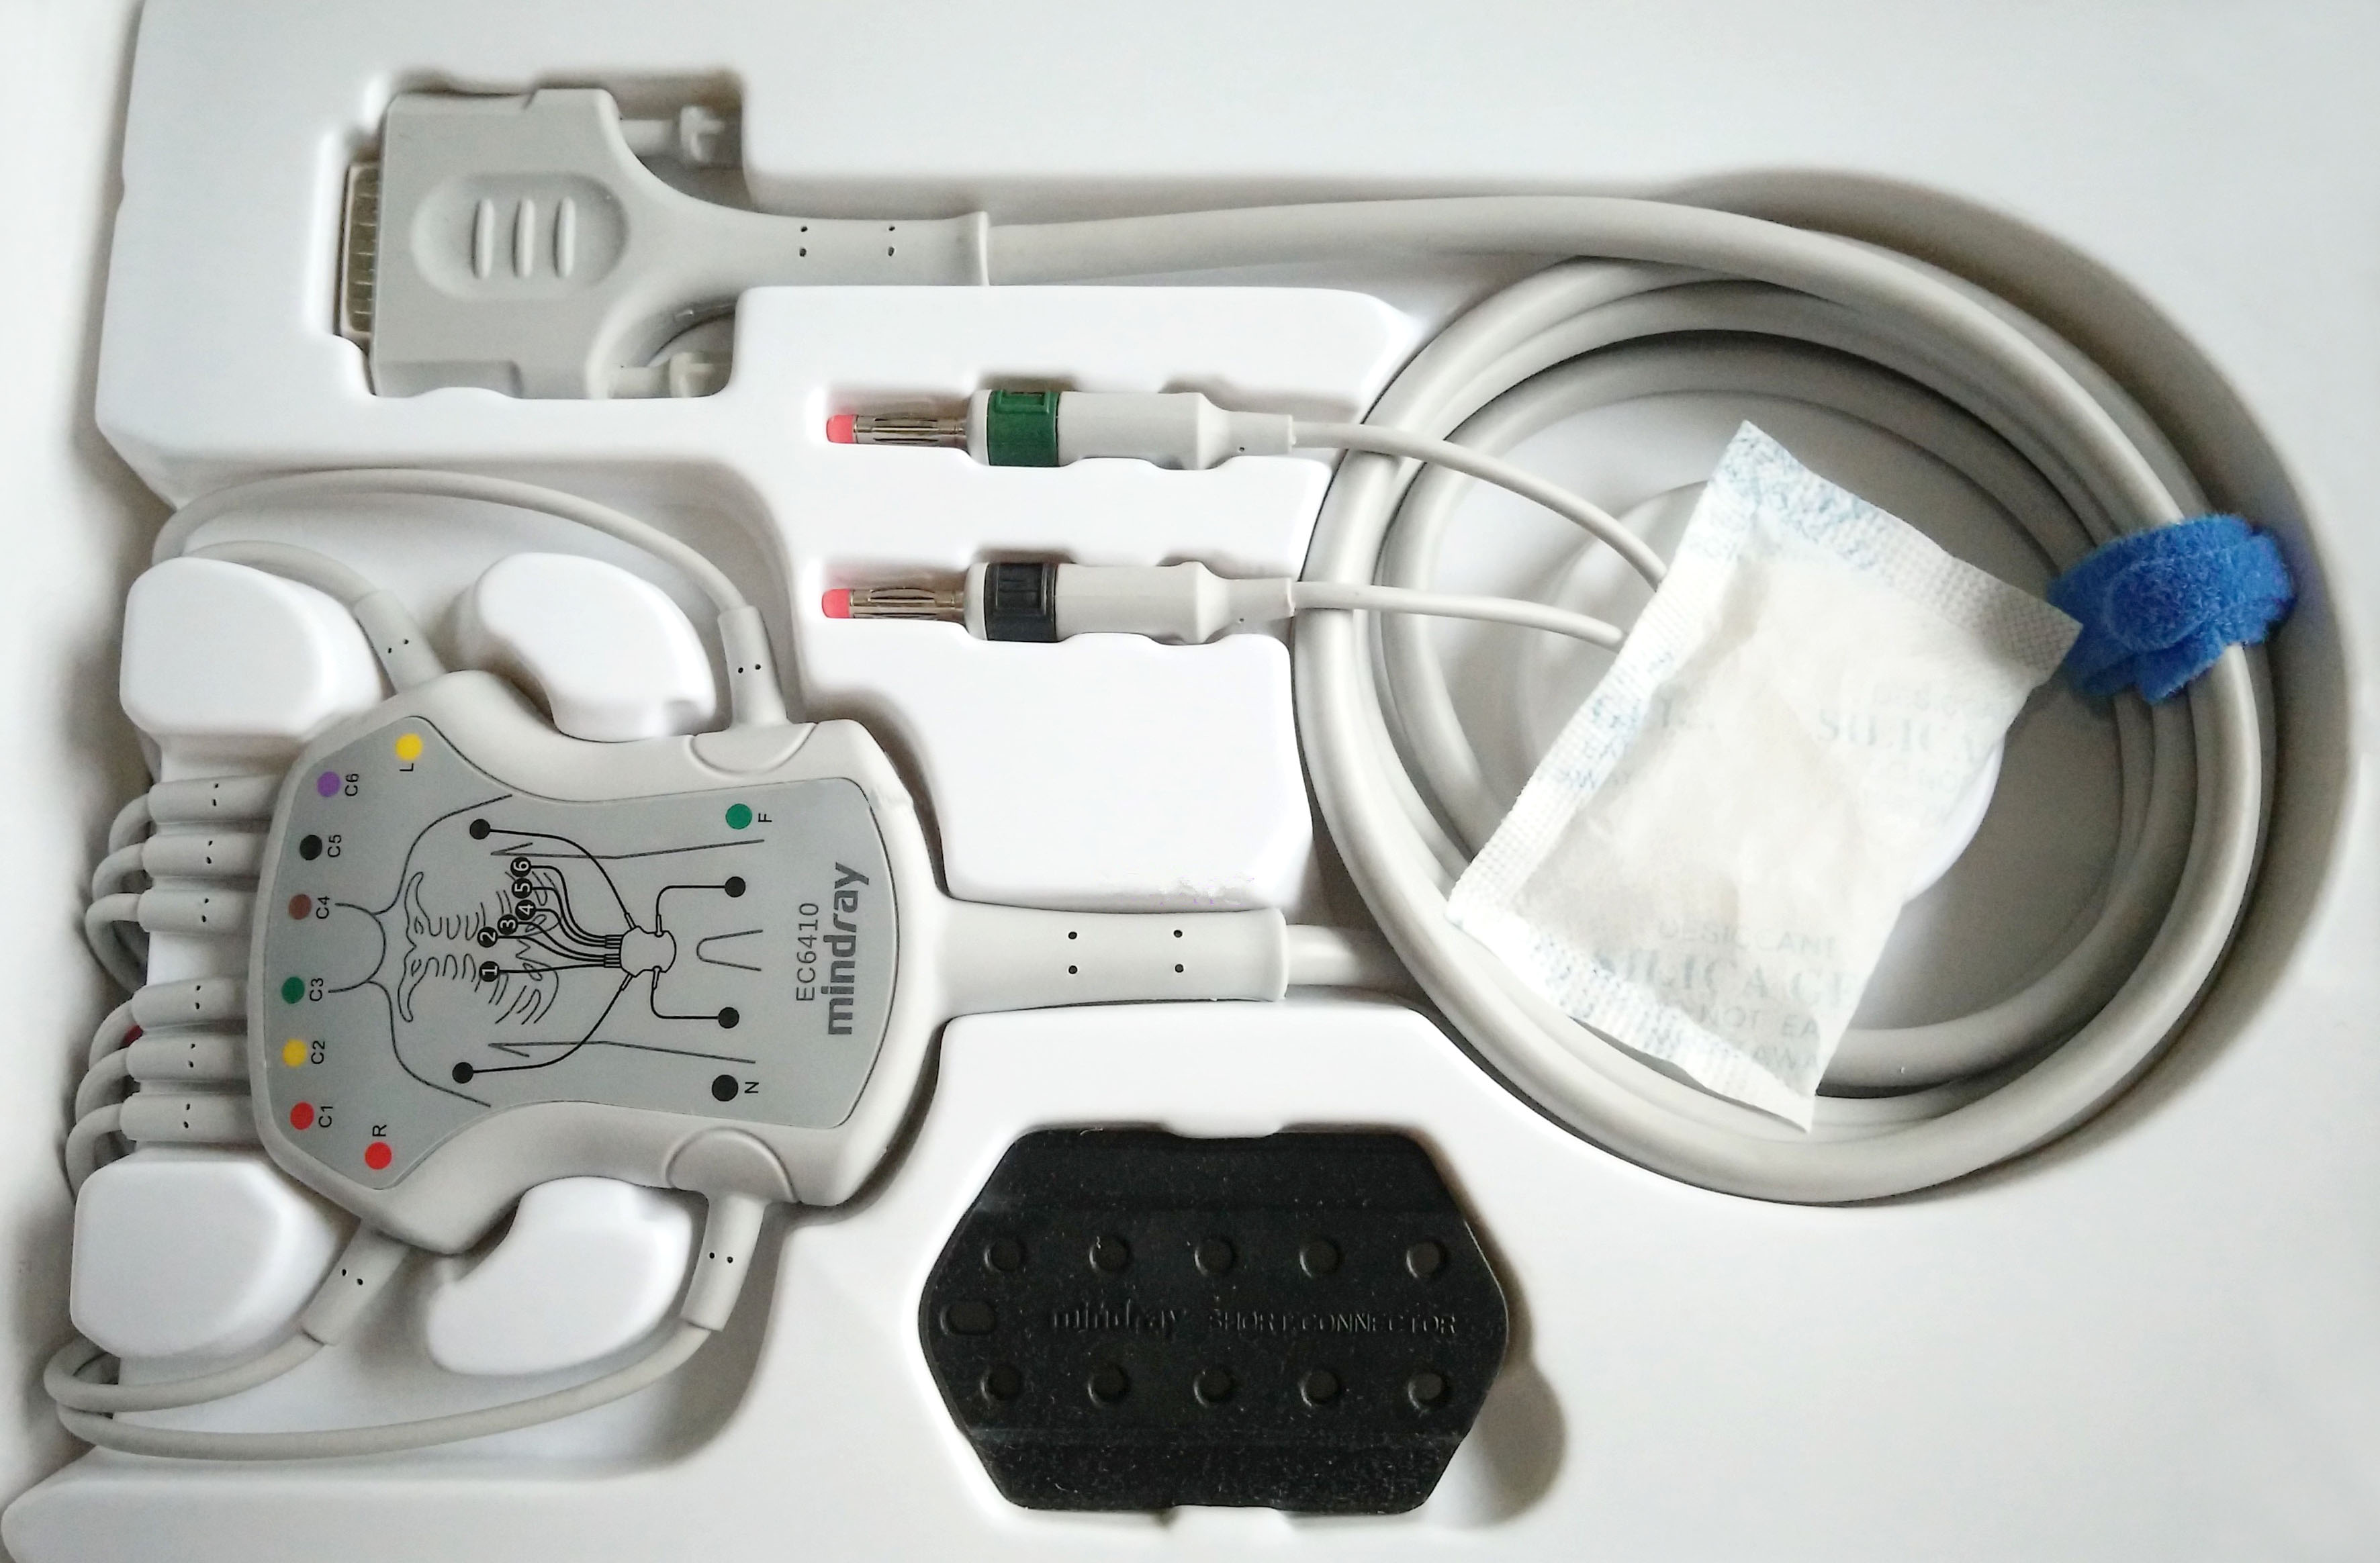 ЭКГ кабель пациента для Mindray BeneHeart R, R3, R12, 040-001644-00, EC6410, оригинал, штекеры banana 4мм